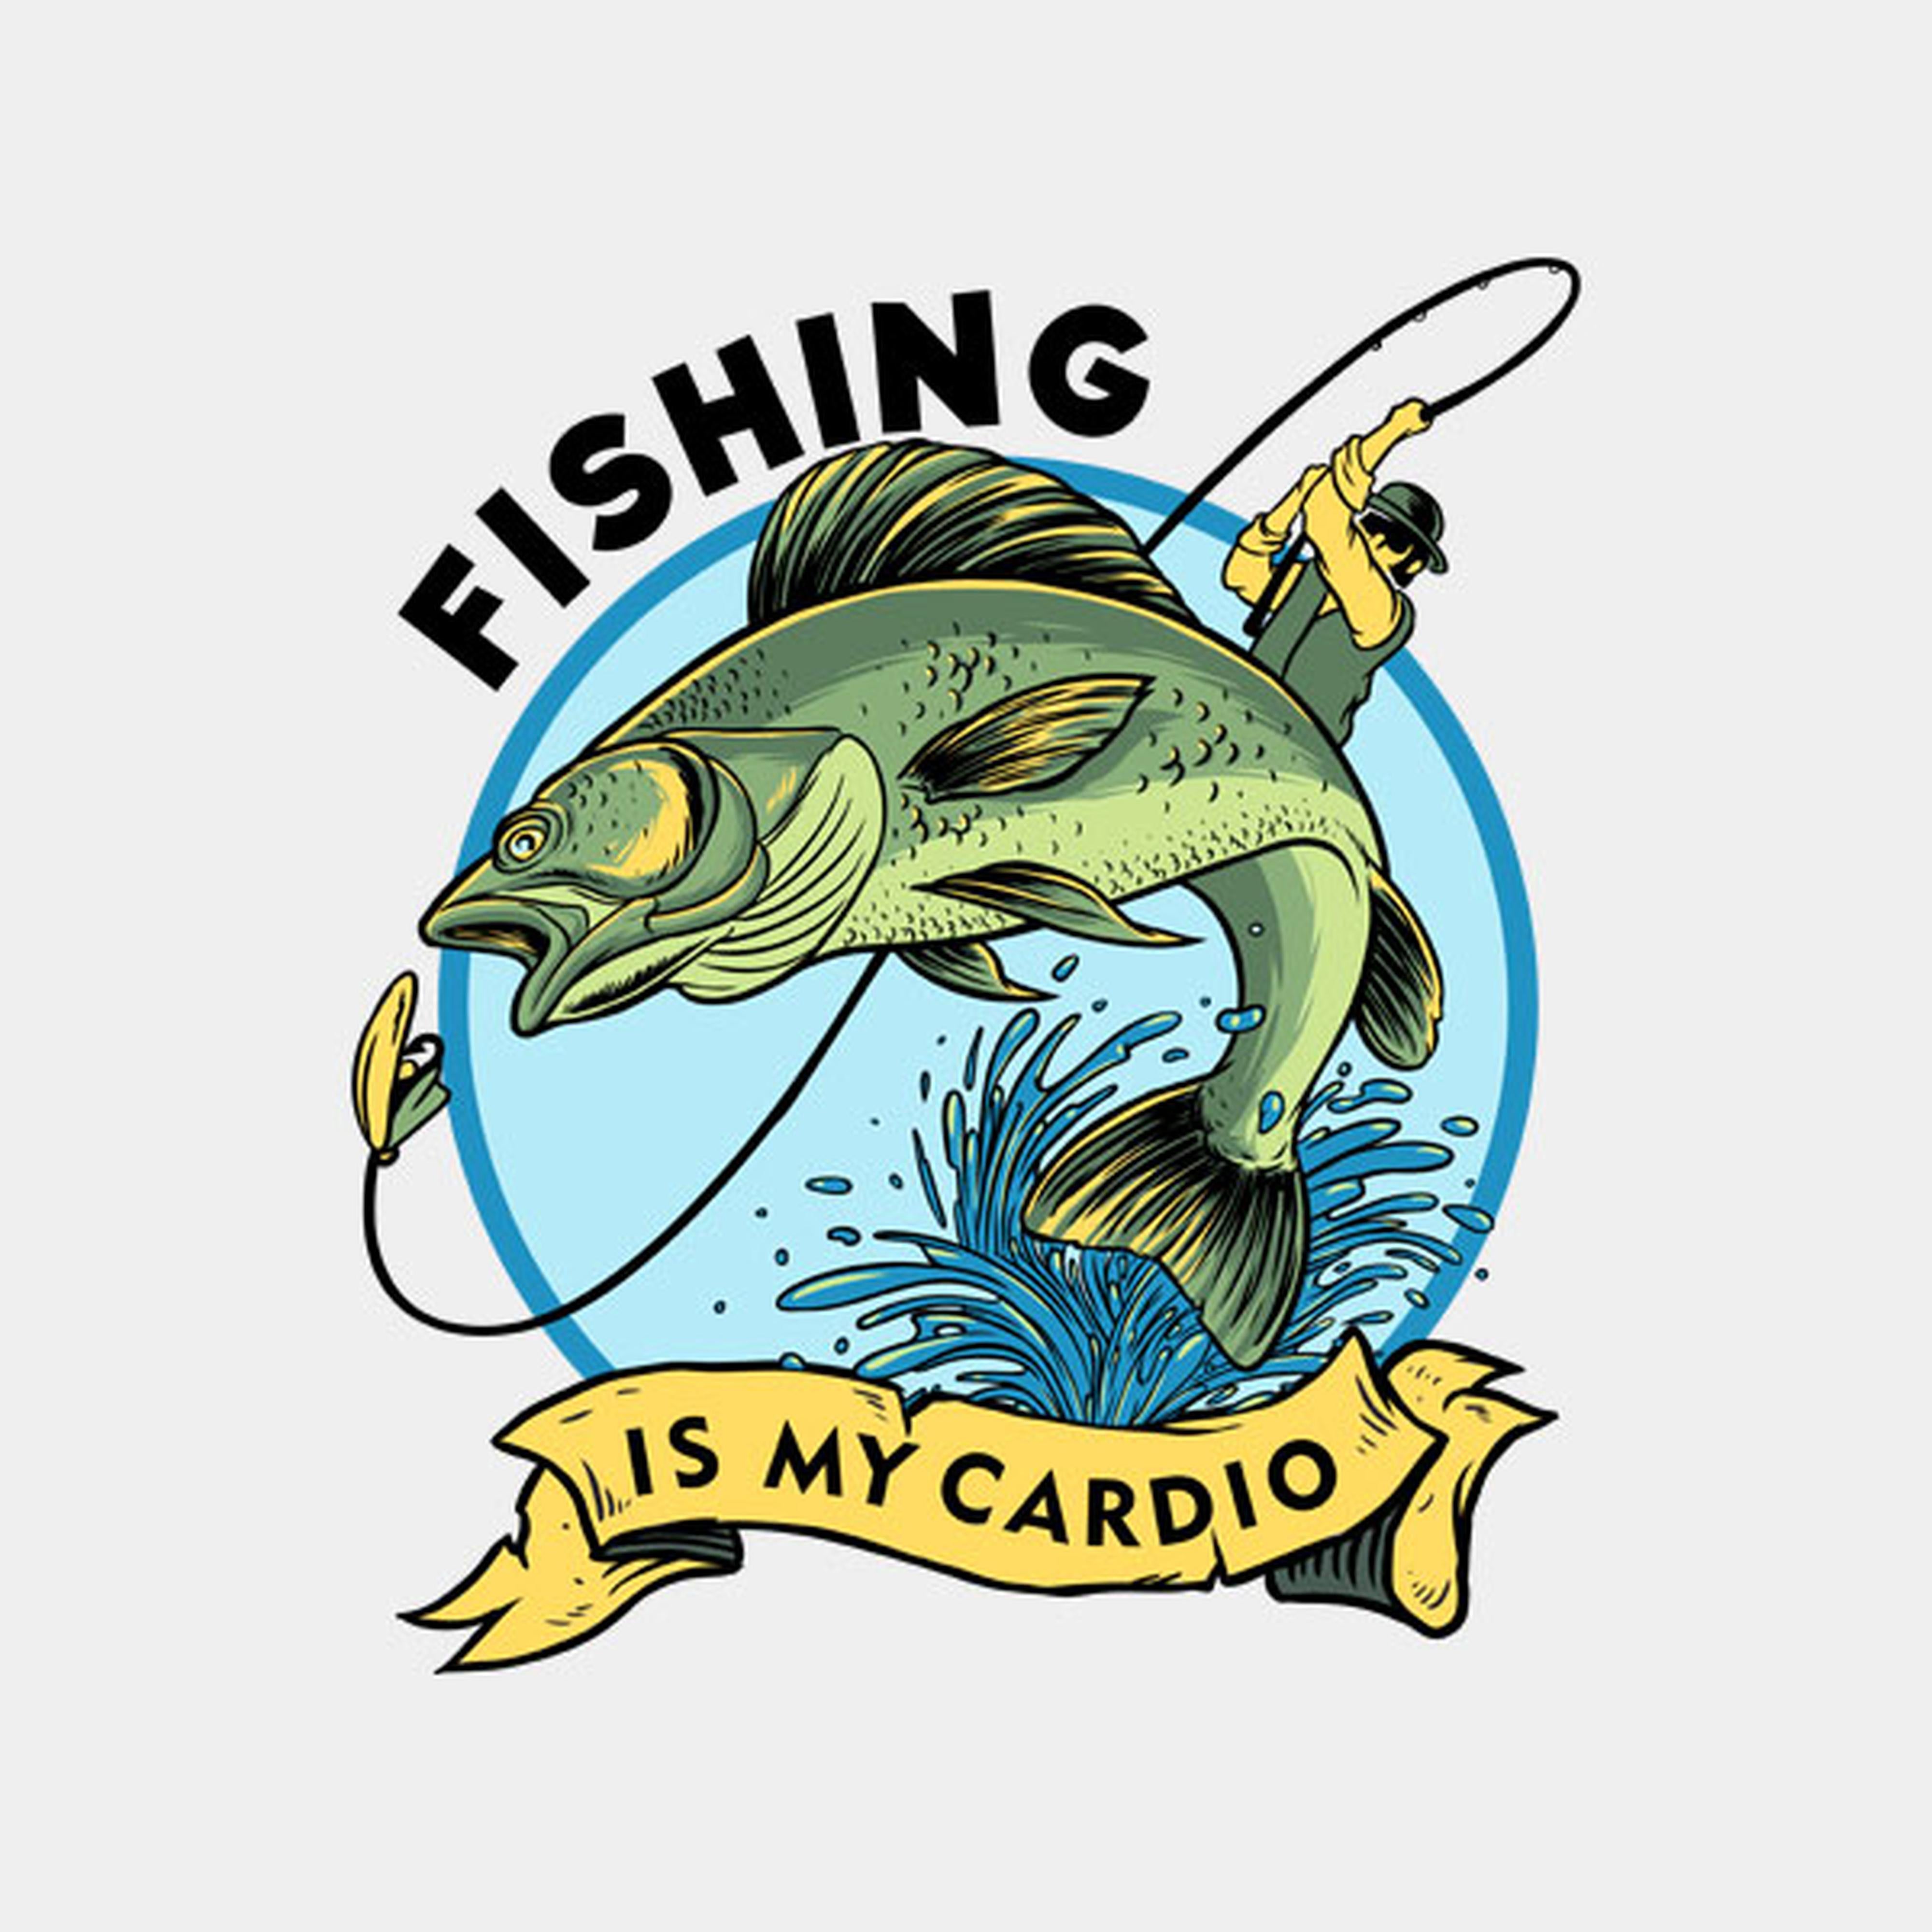 Fishing is my cardio - T-shirt